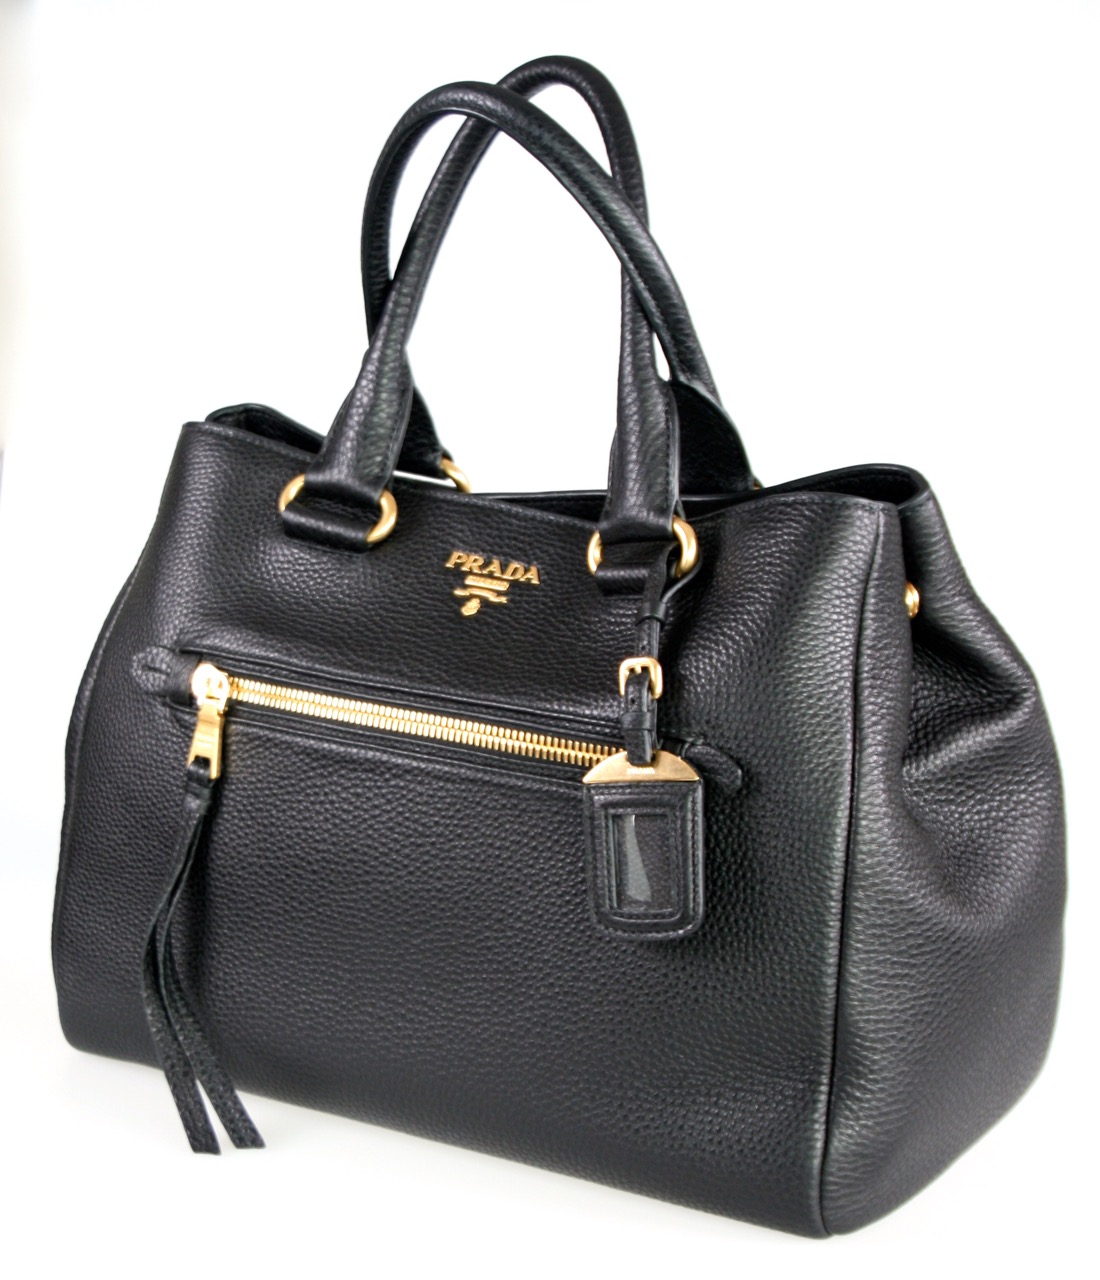 Authentic Luxury Prada Bag Shopper Handbag BN2793 Black New | eBay  